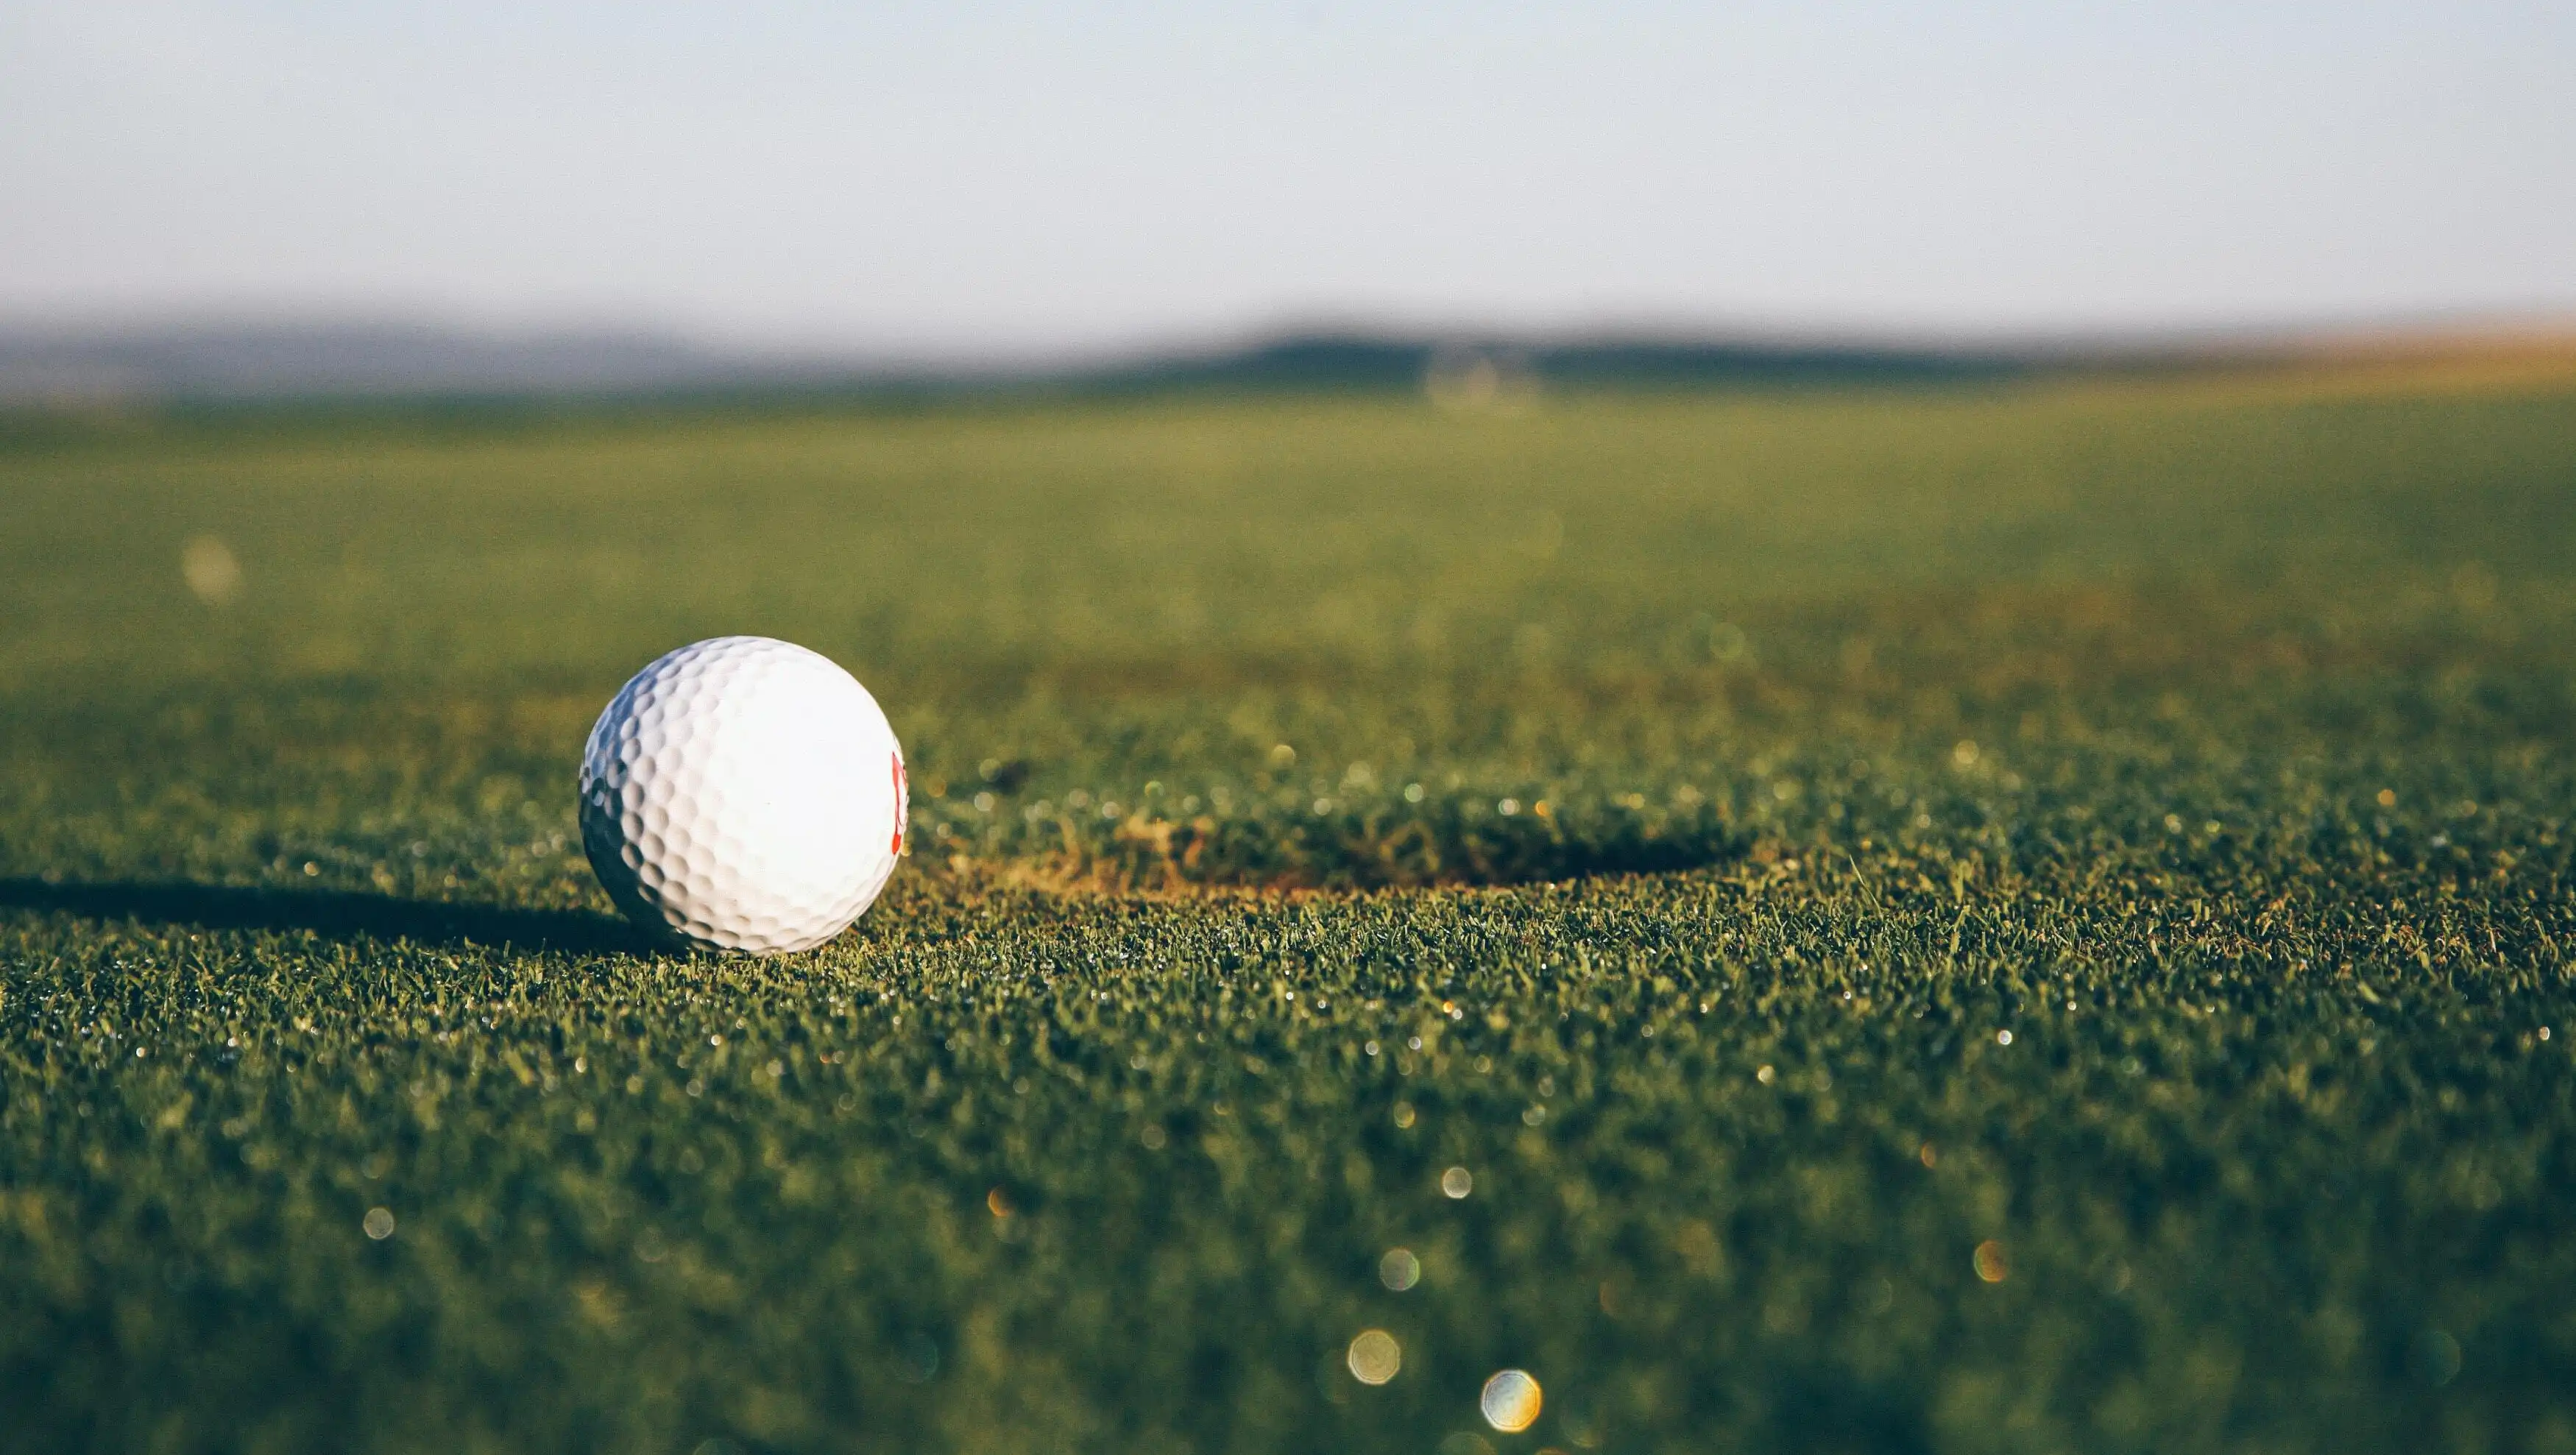 Blog Golf: Smallest Post Wins